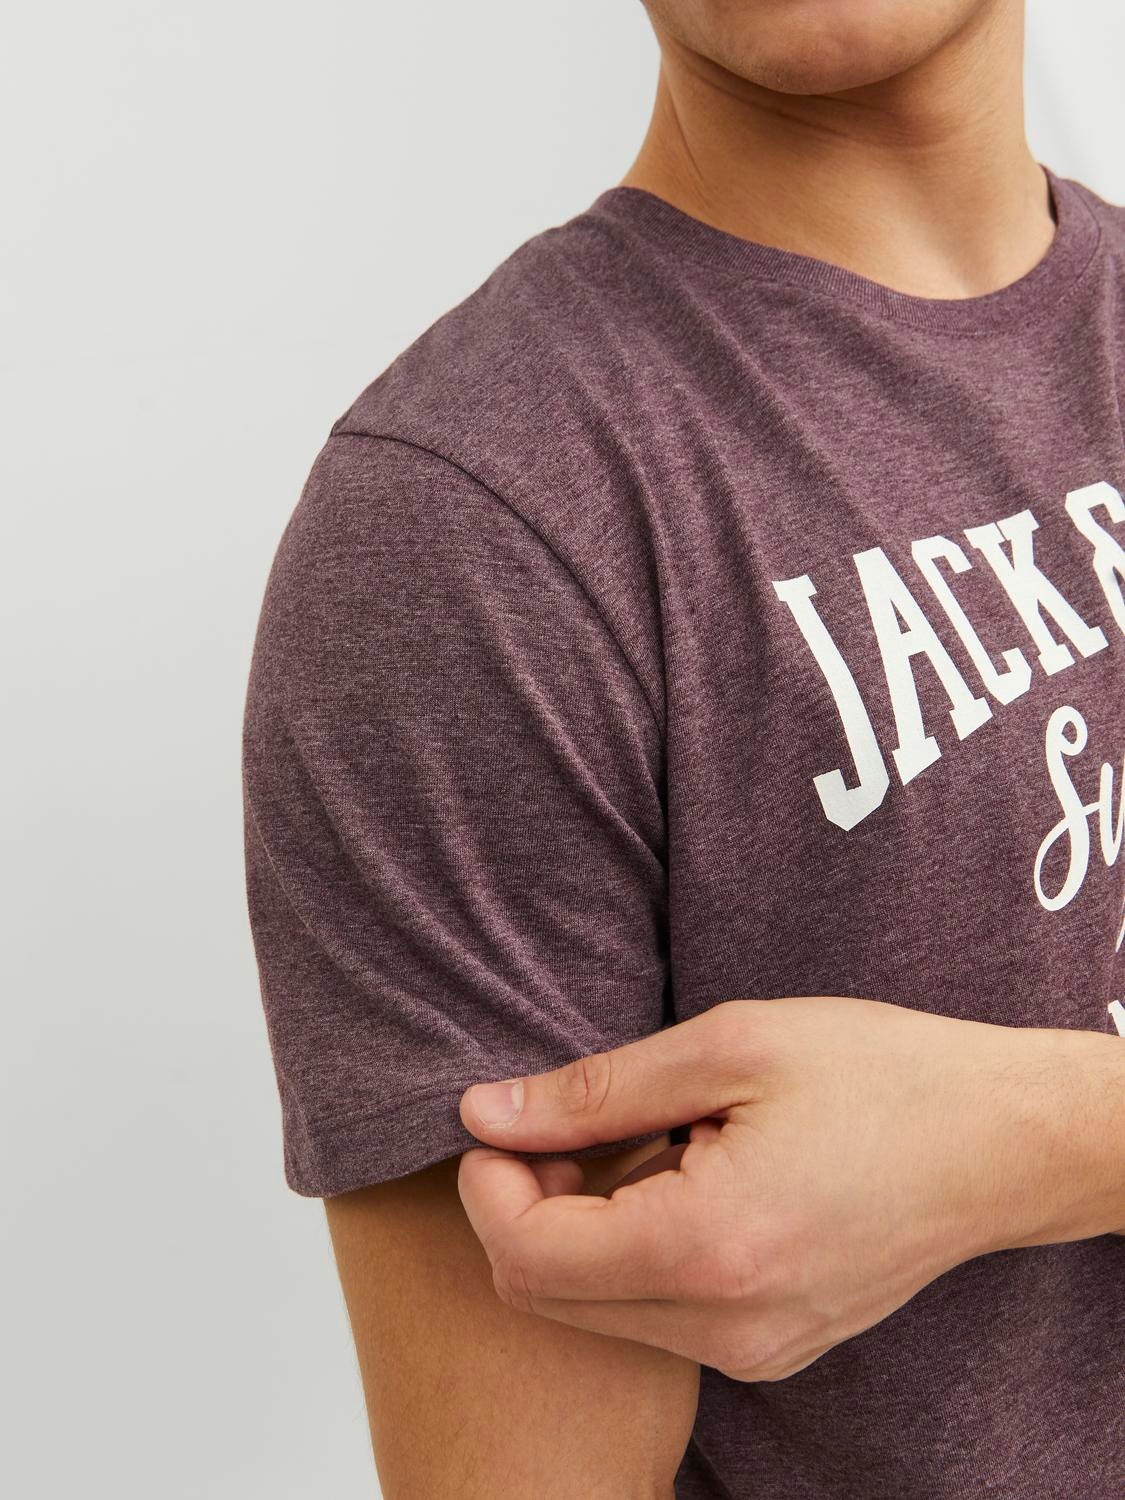 Jack & Jones Καλοκαιρινό μπλουζάκι -Port Royale - 12238252